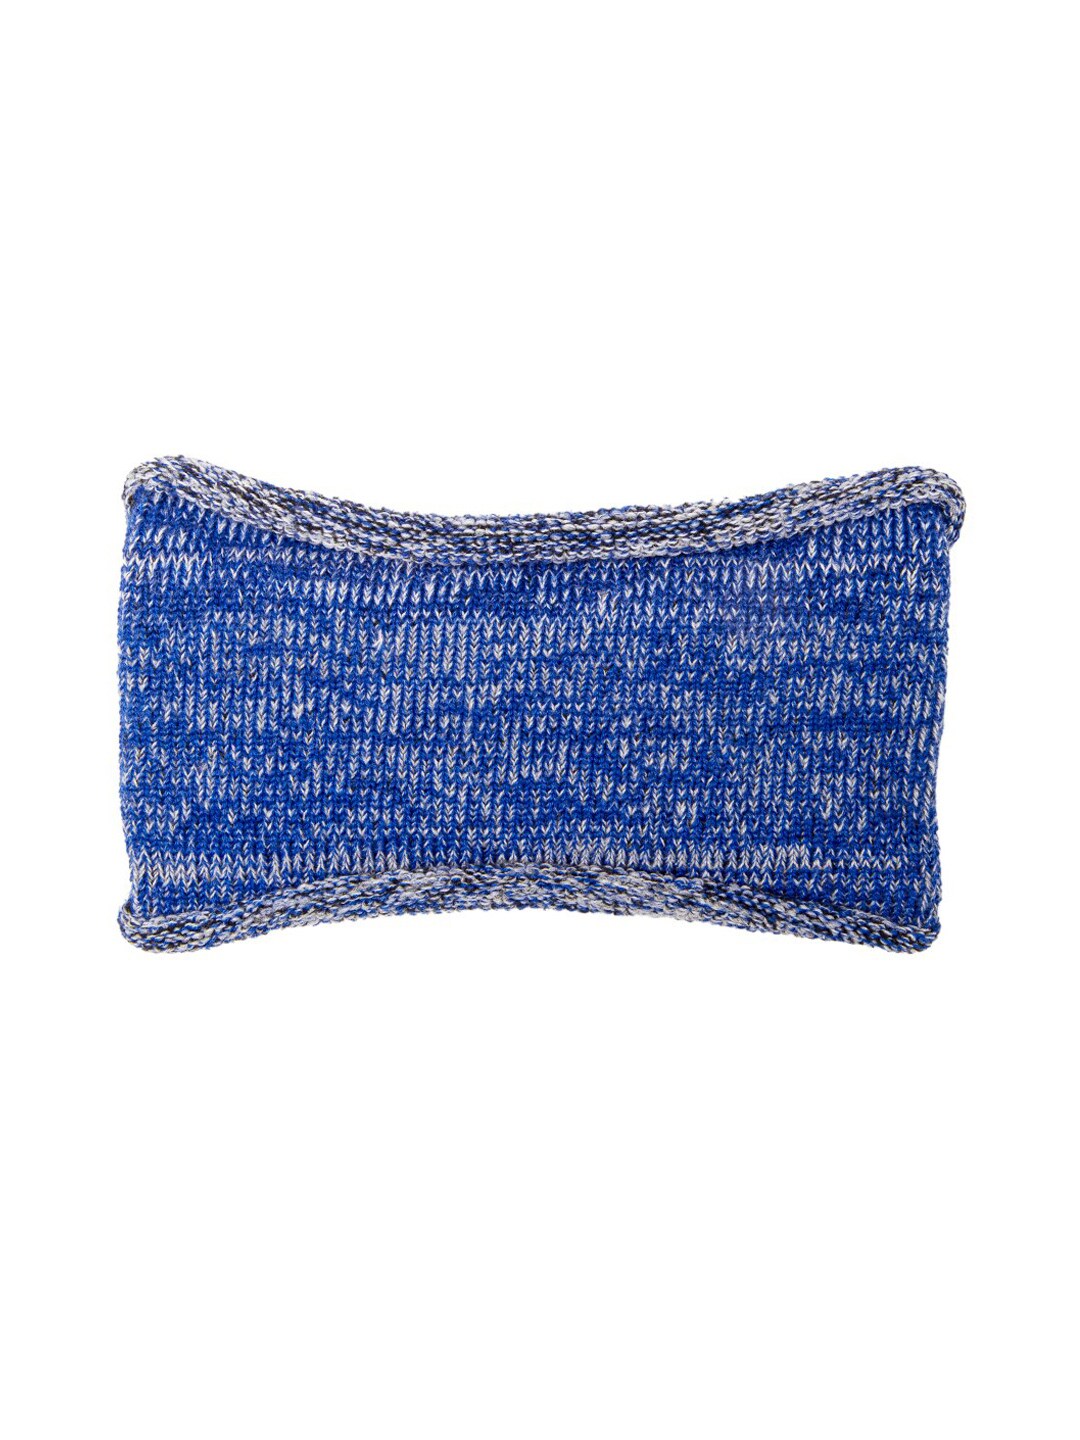 Bharatasya Blue Cotton Knitted Headband Price in India